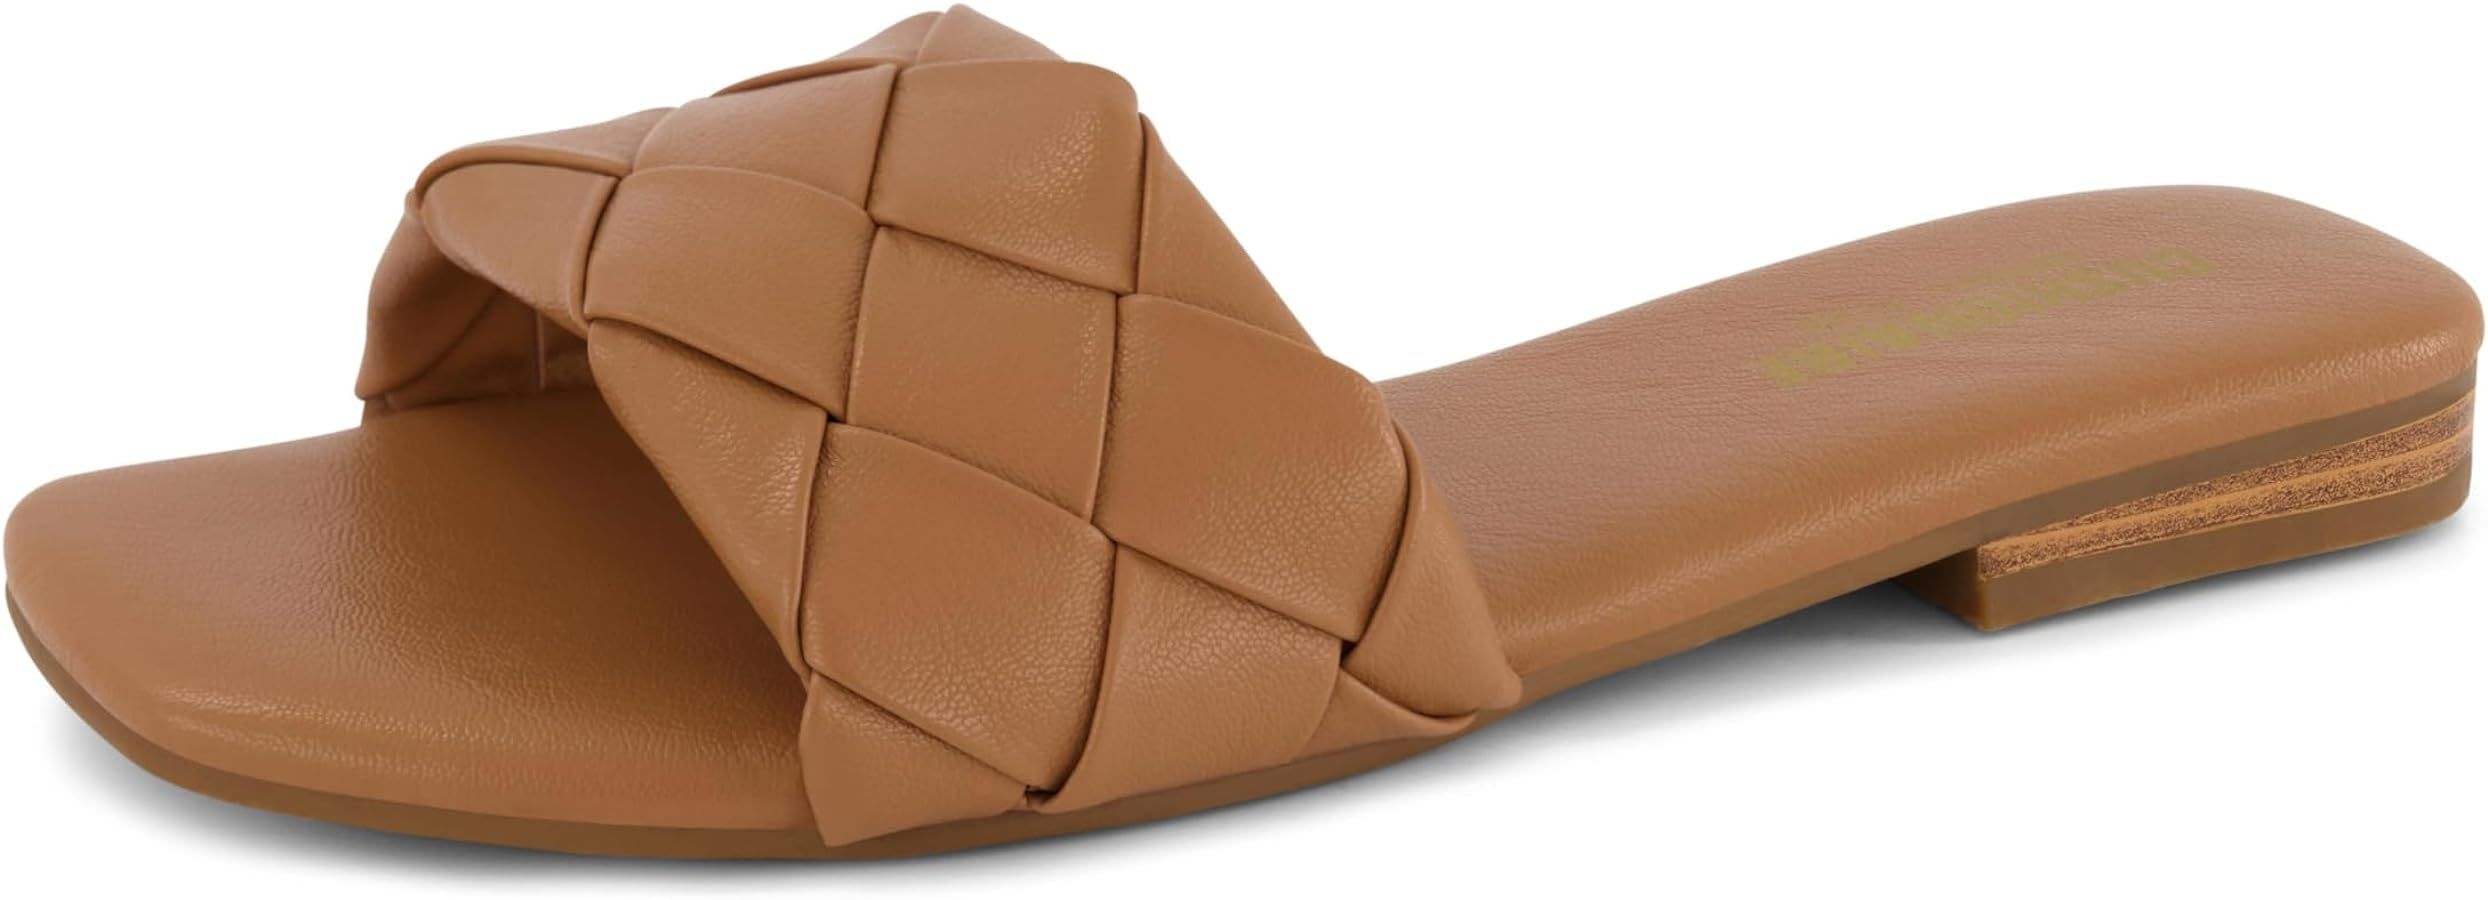 woven slide sandal +Memory Foam, Wide Widths Available | Amazon (US)